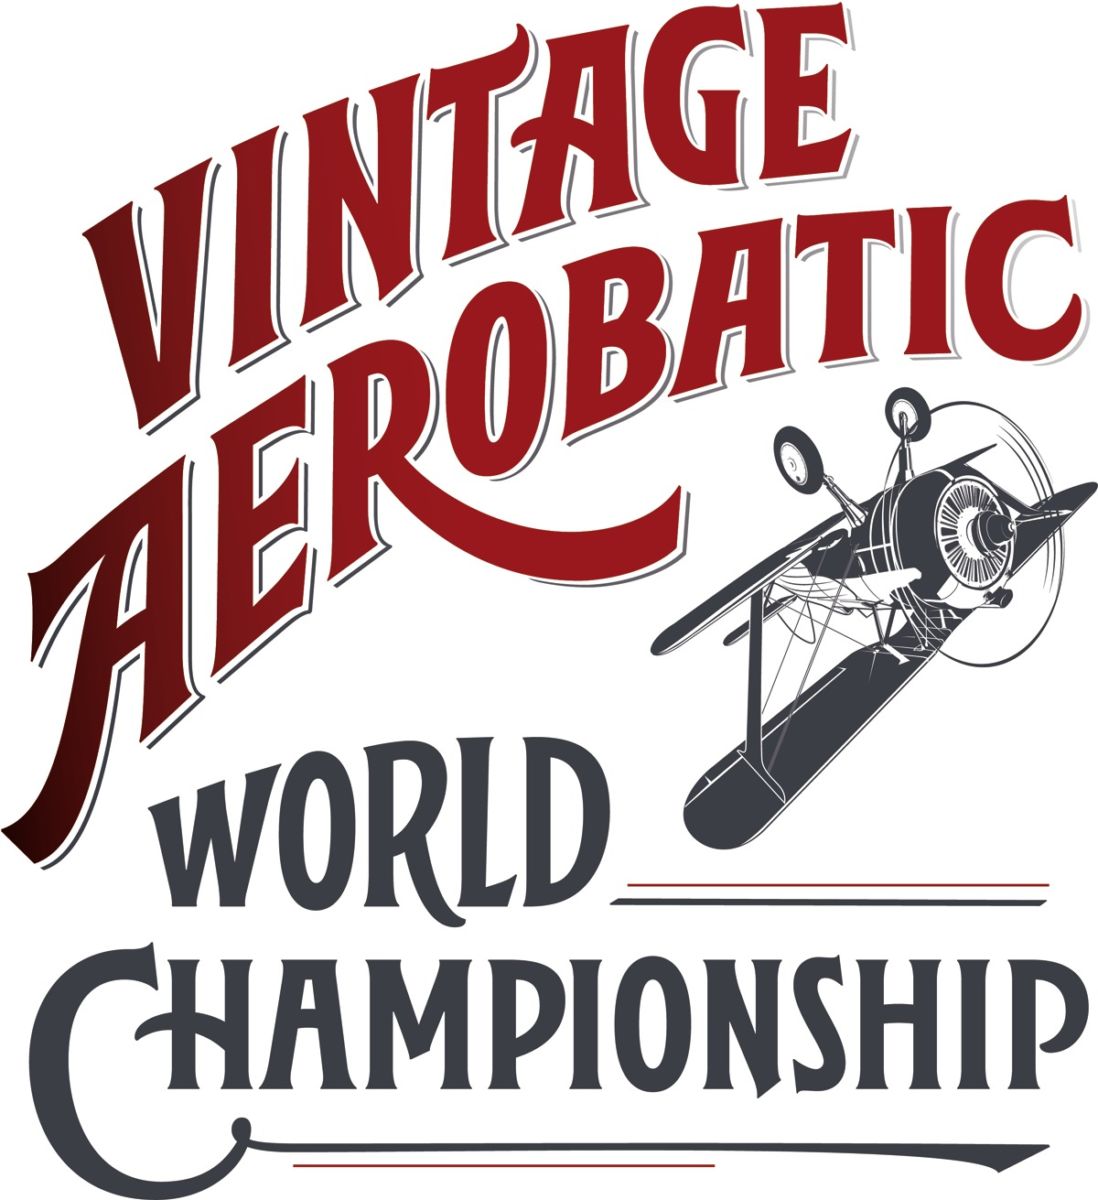 Vintage Aerobatic World Championship